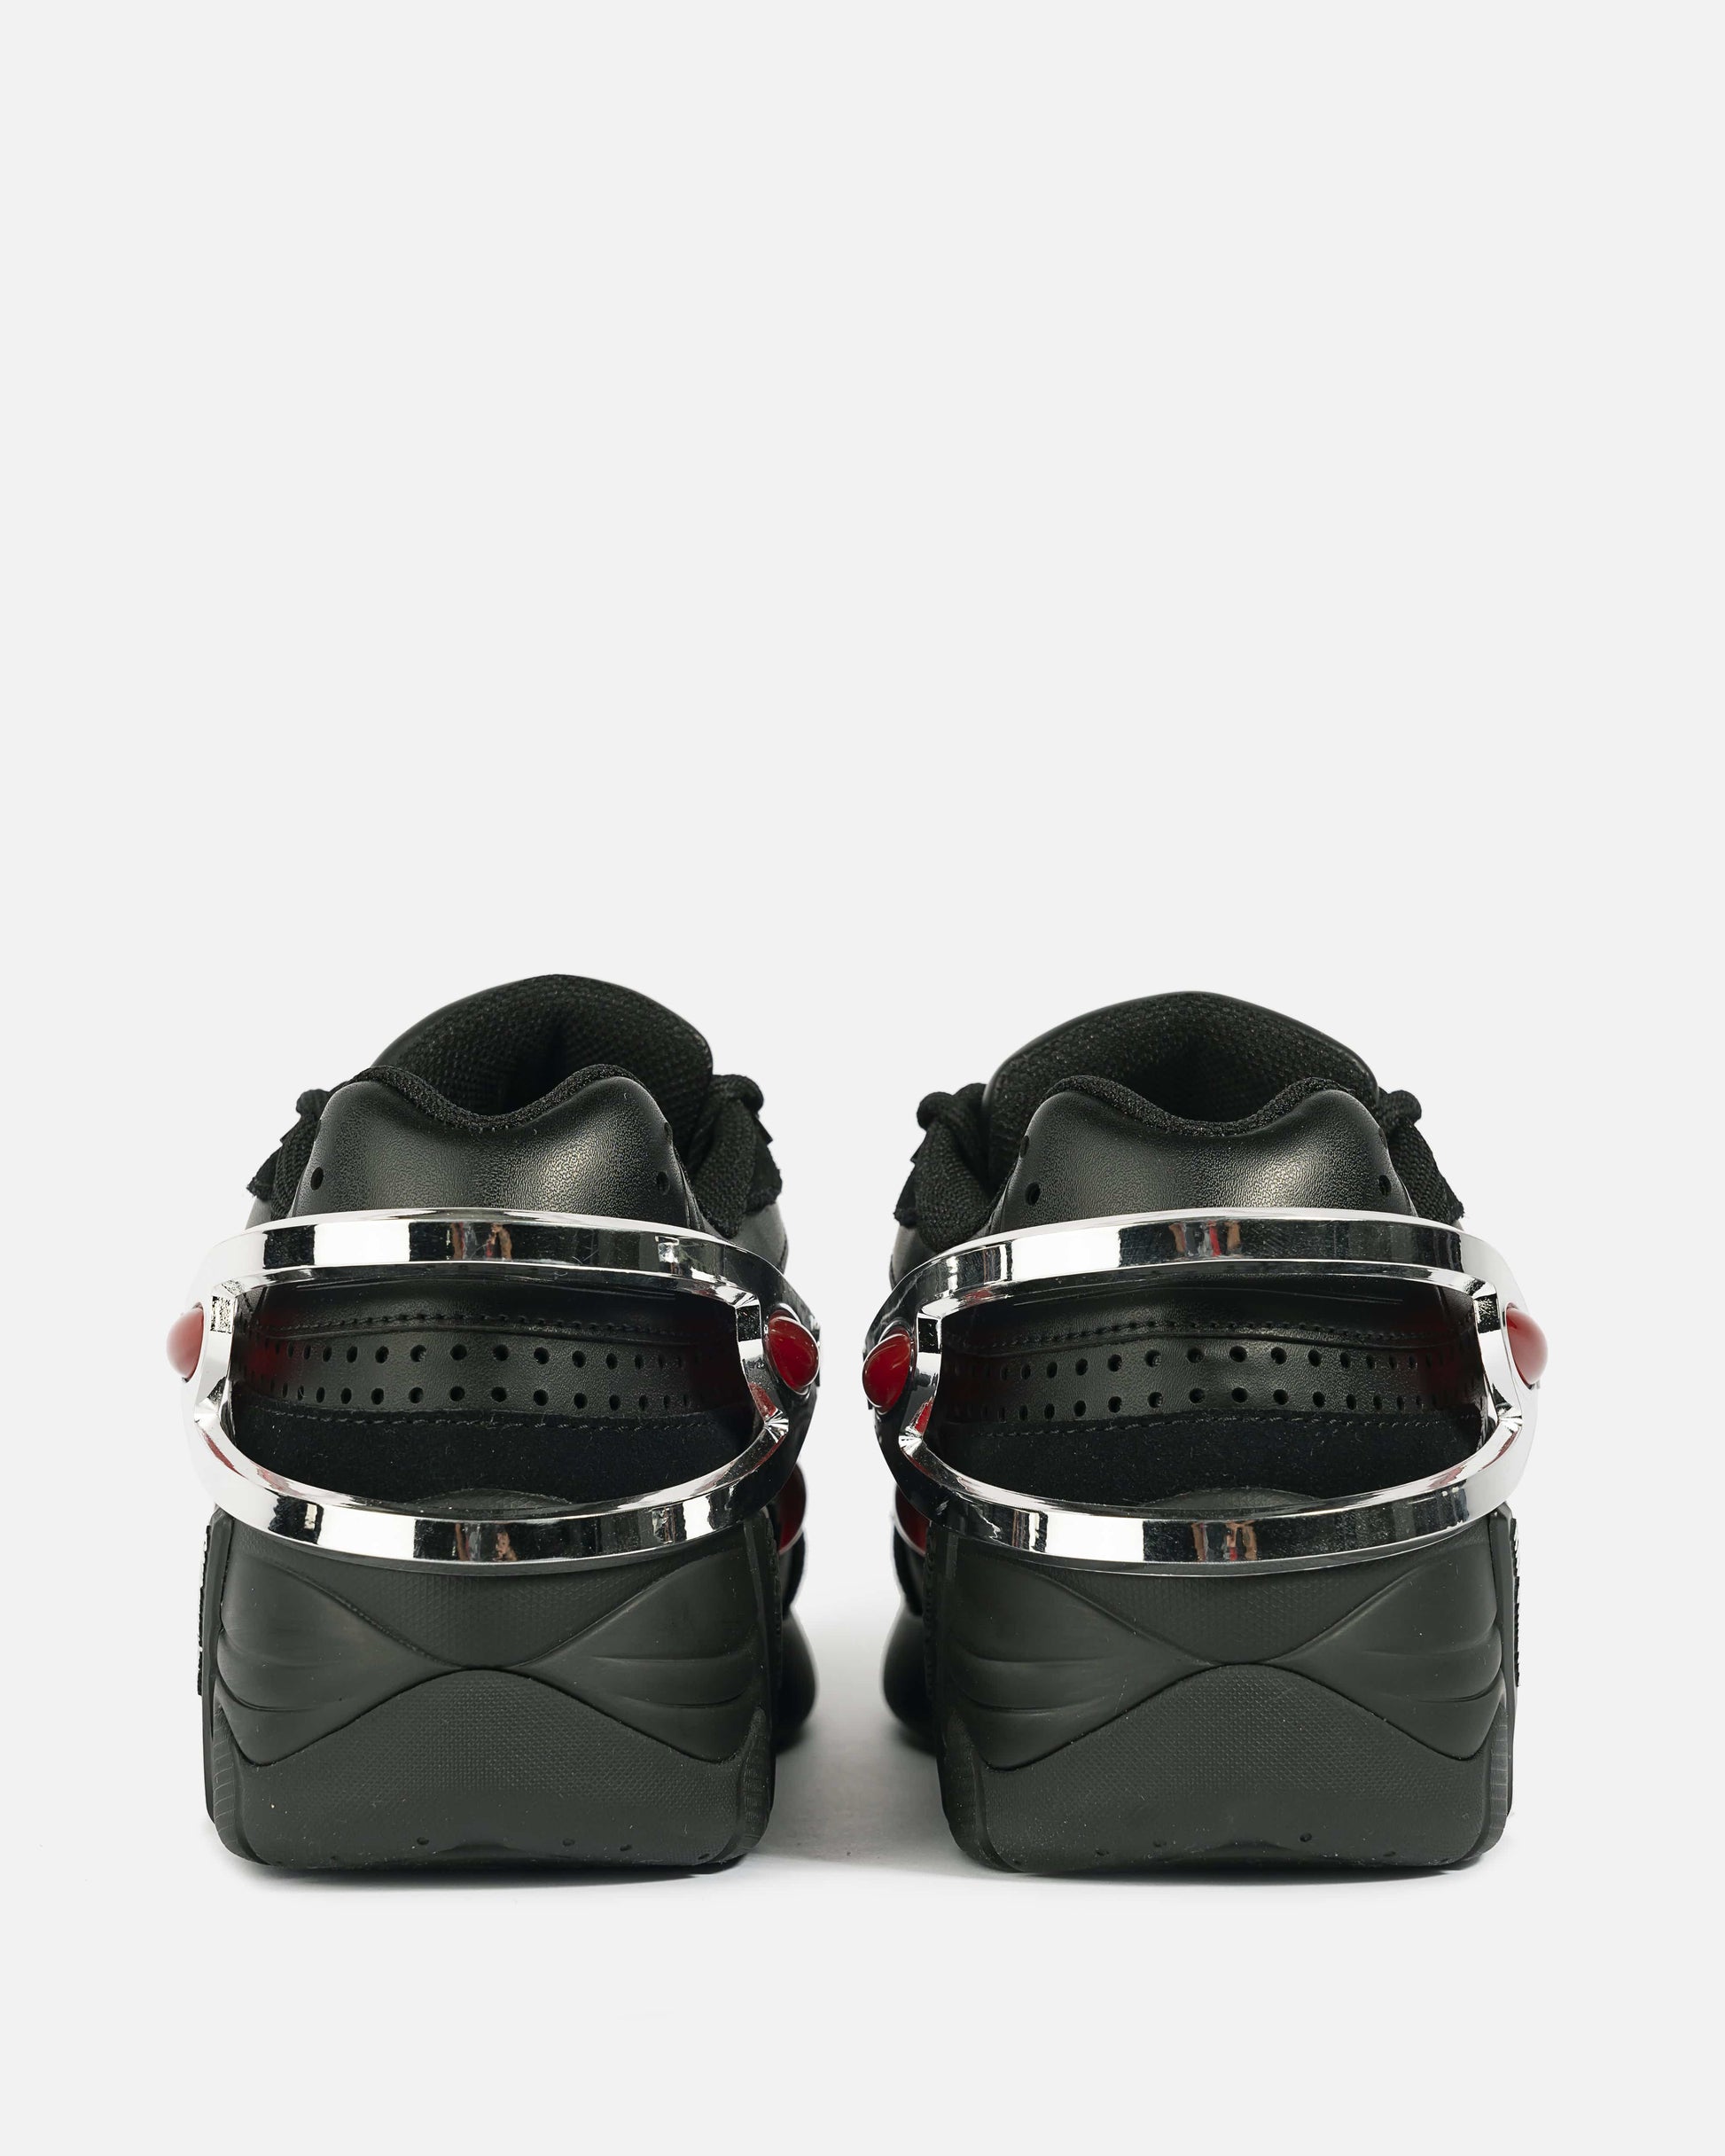 Raf Simons Men's Sneakers Cylon 21 in Black/Red